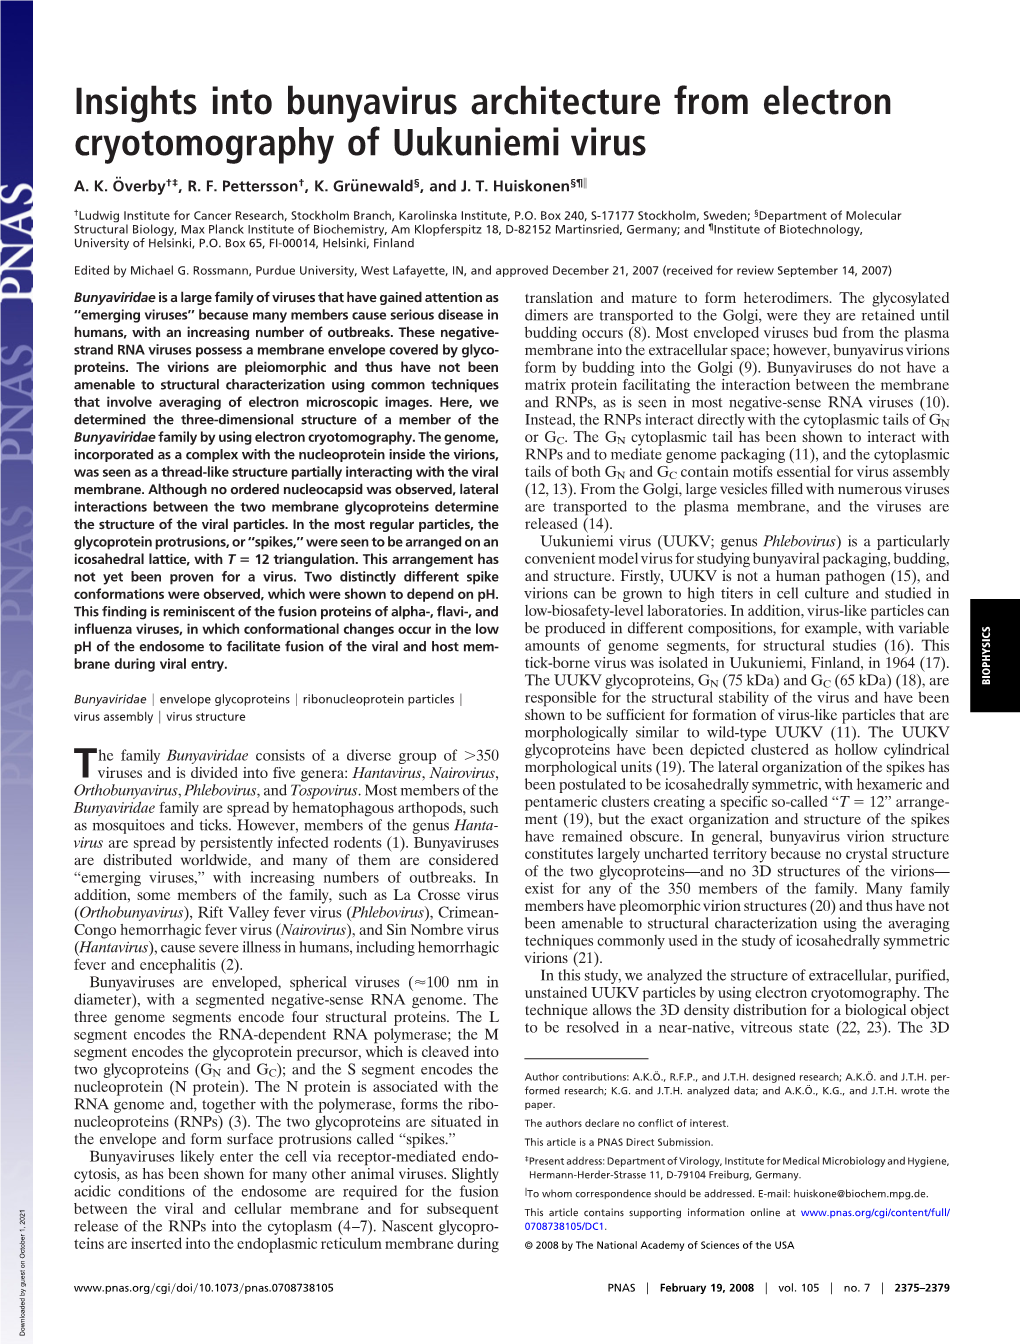 Insights Into Bunyavirus Architecture from Electron Cryotomography of Uukuniemi Virus